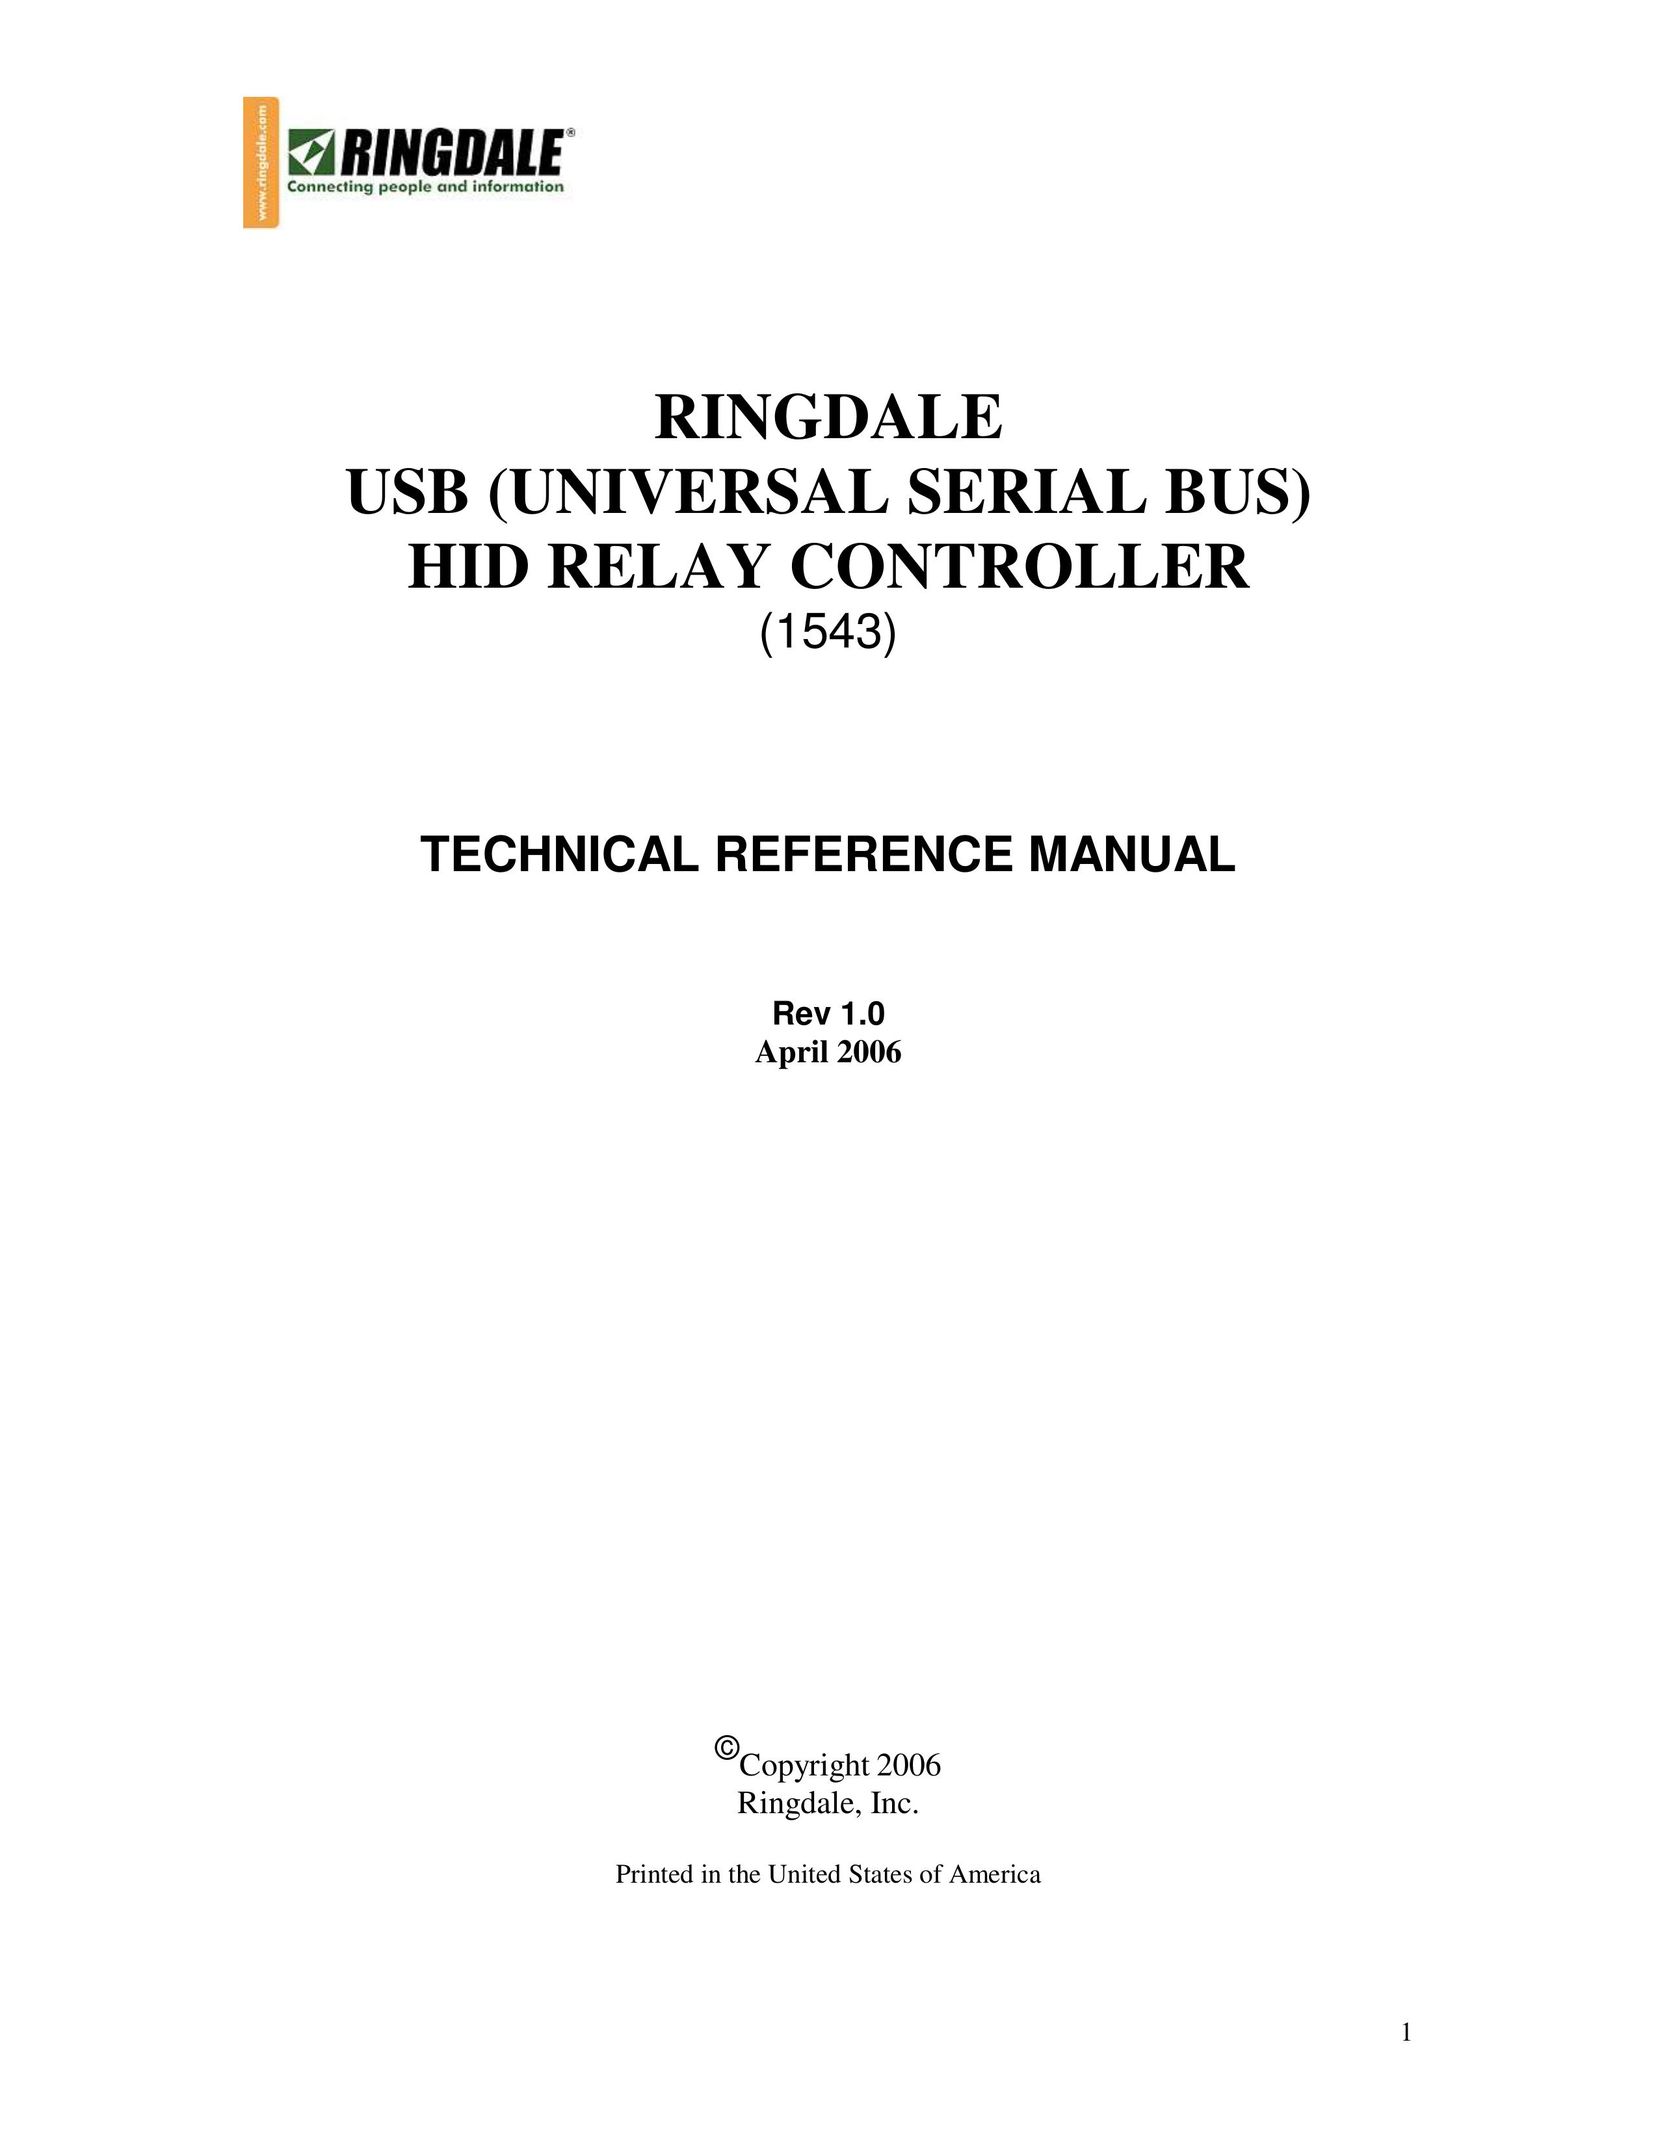 Ringdale 1543 Switch User Manual